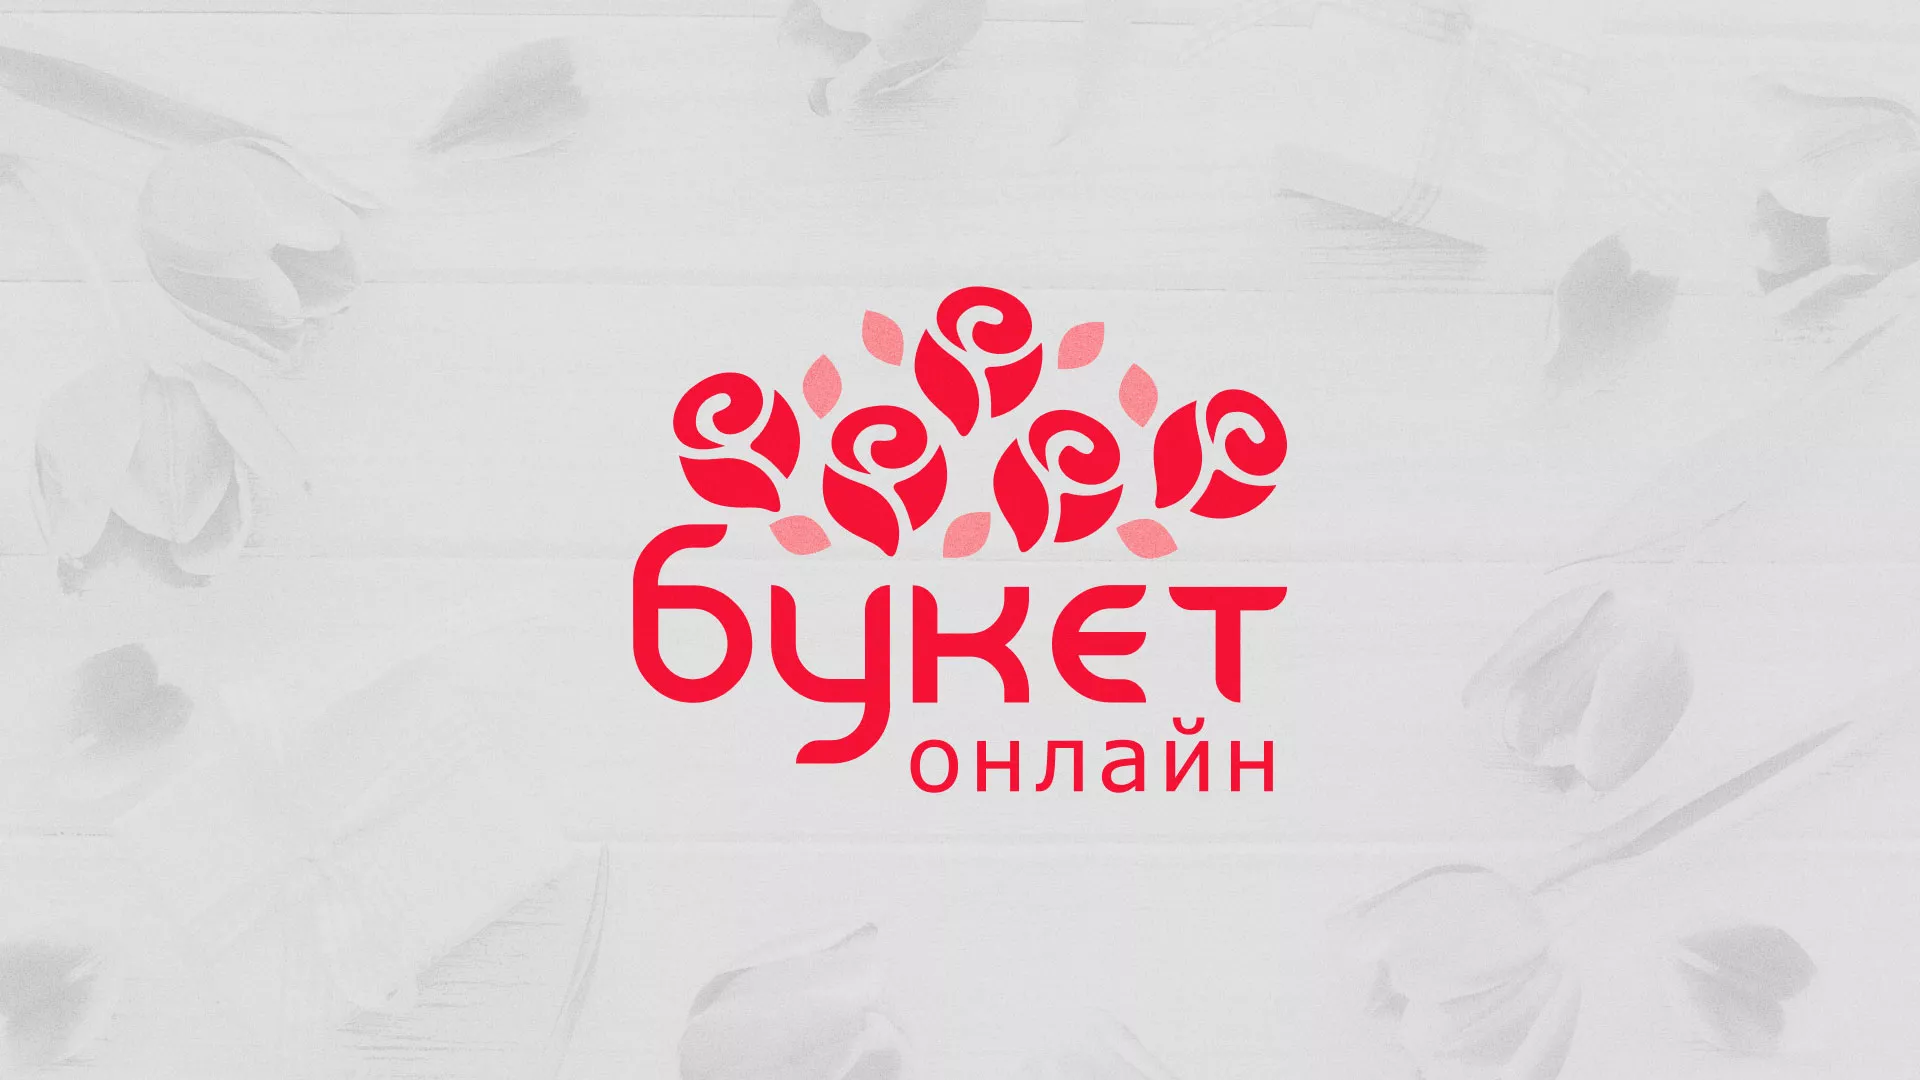 Создание интернет-магазина «Букет-онлайн» по цветам в Снежинске